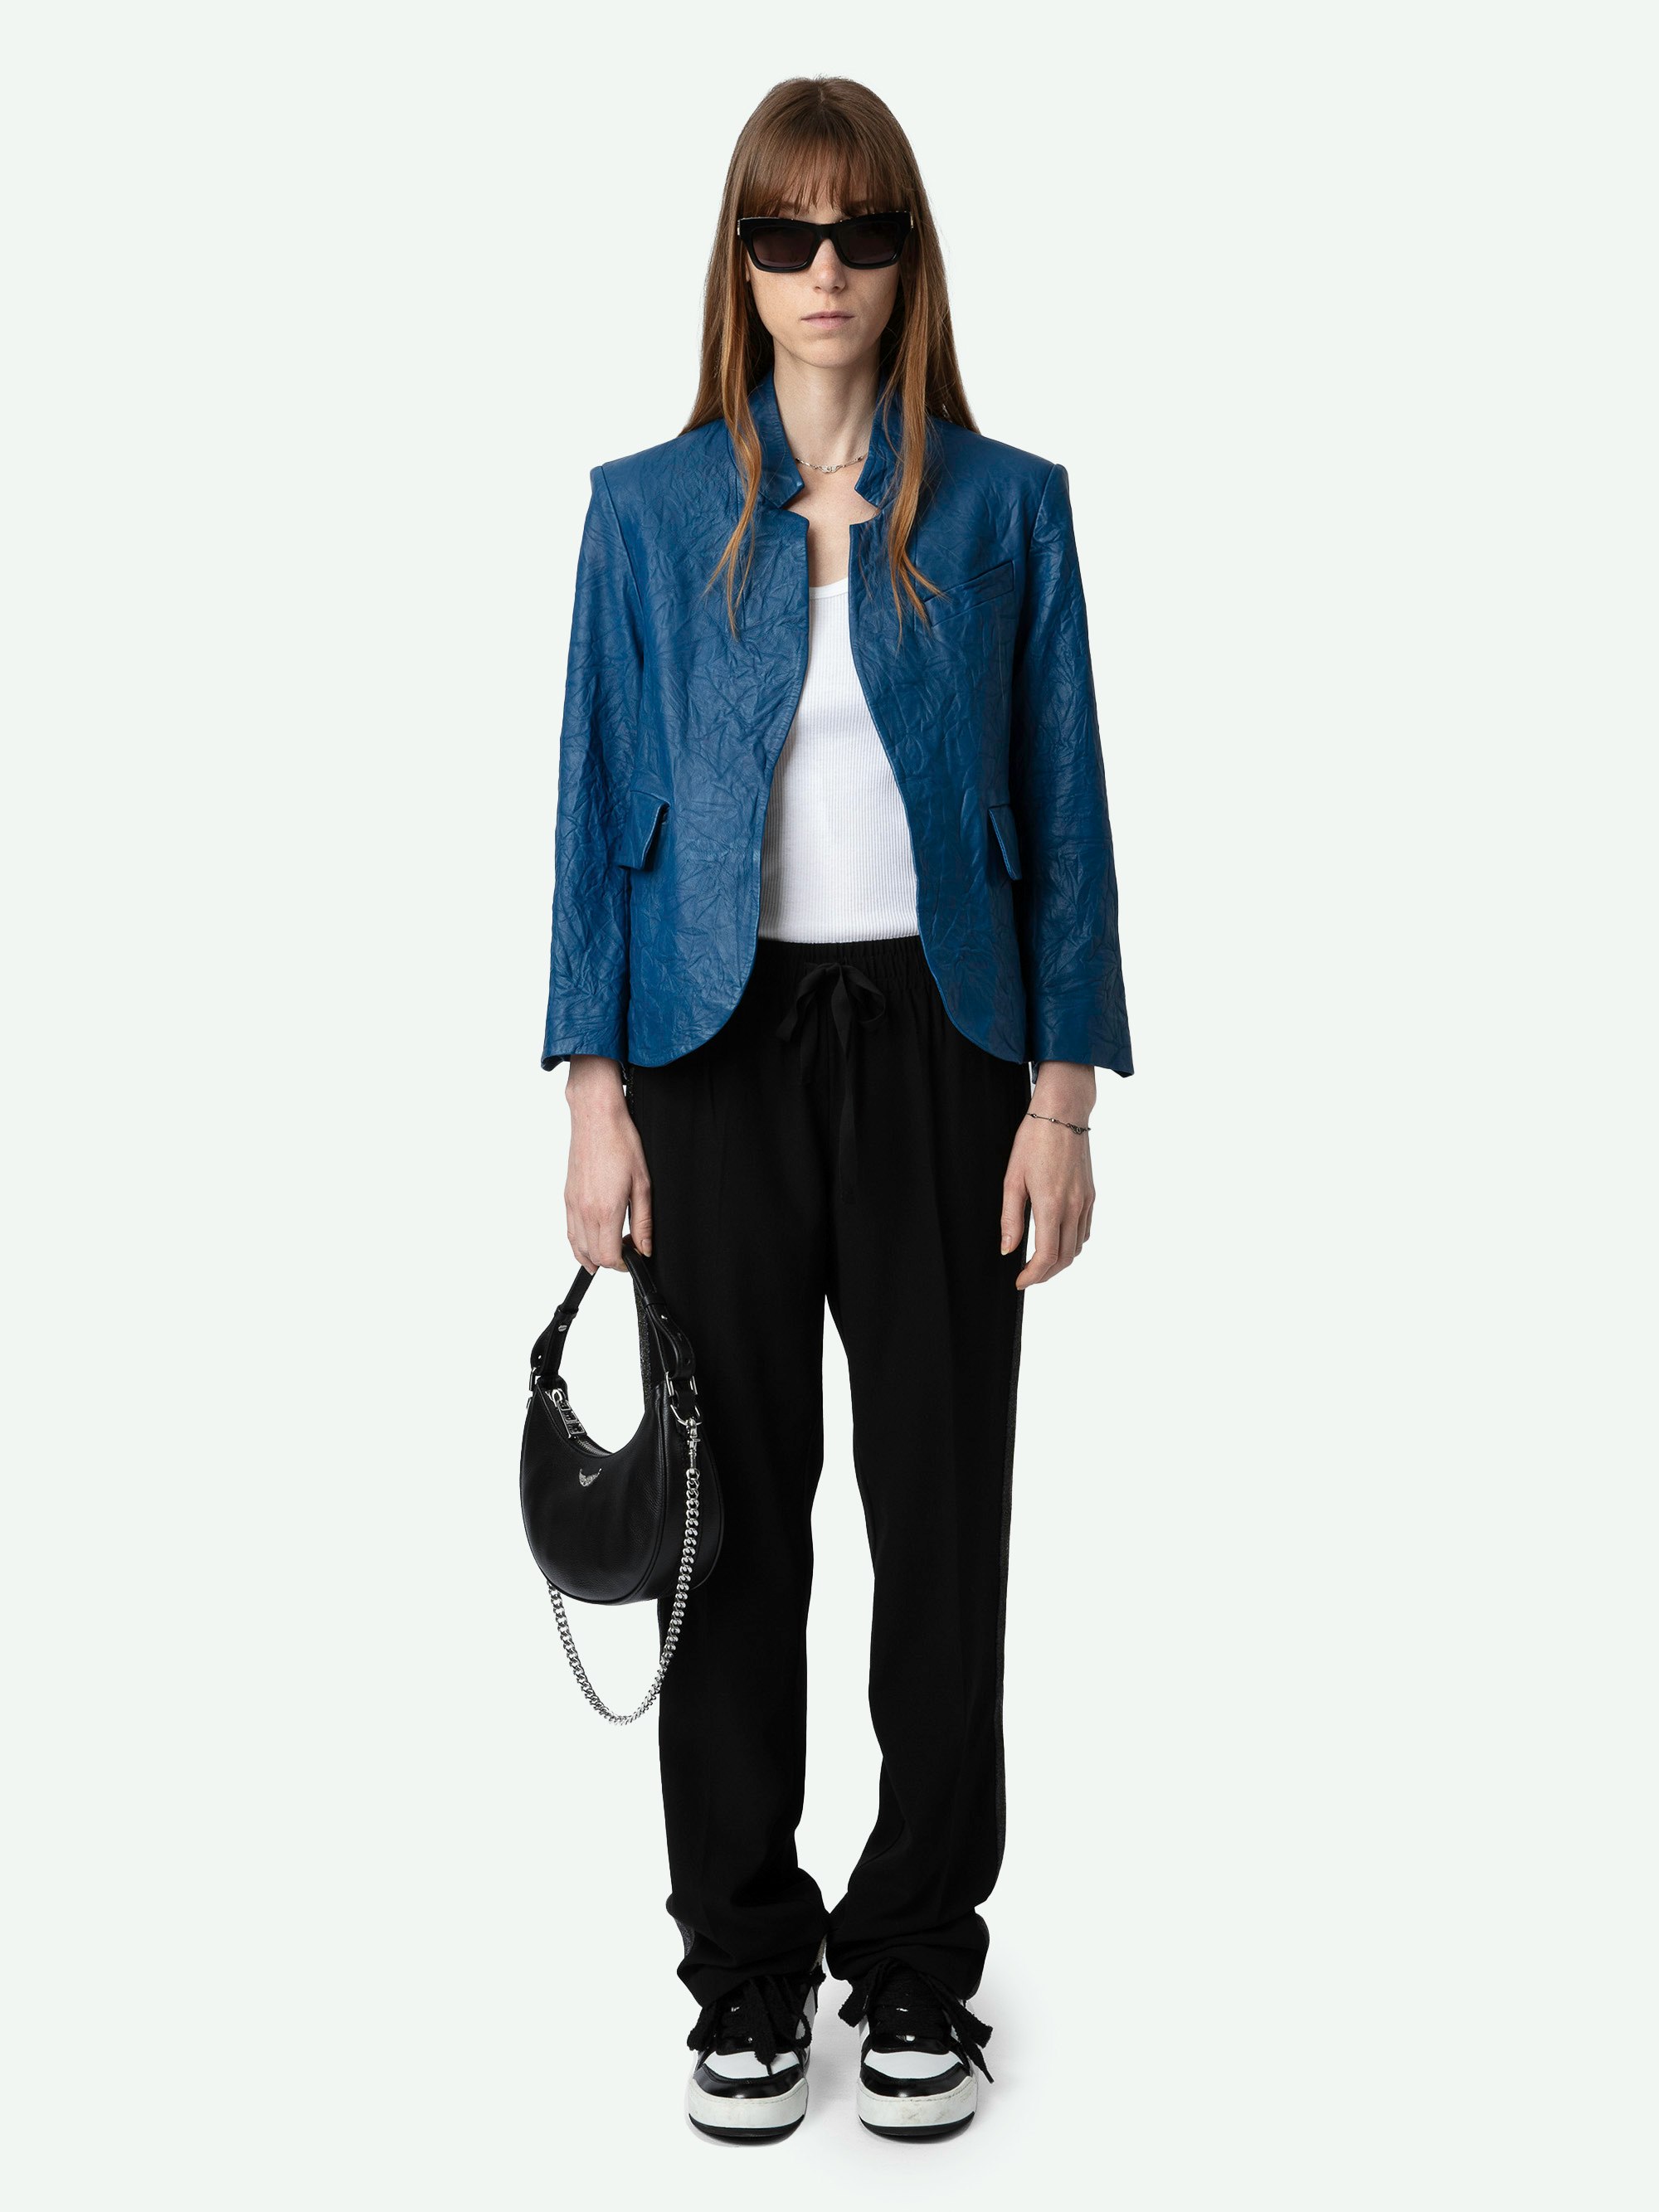 Verys Crinkled Leather Blazer - Blue crinkled leather blazer with 3/4-length sleeves.